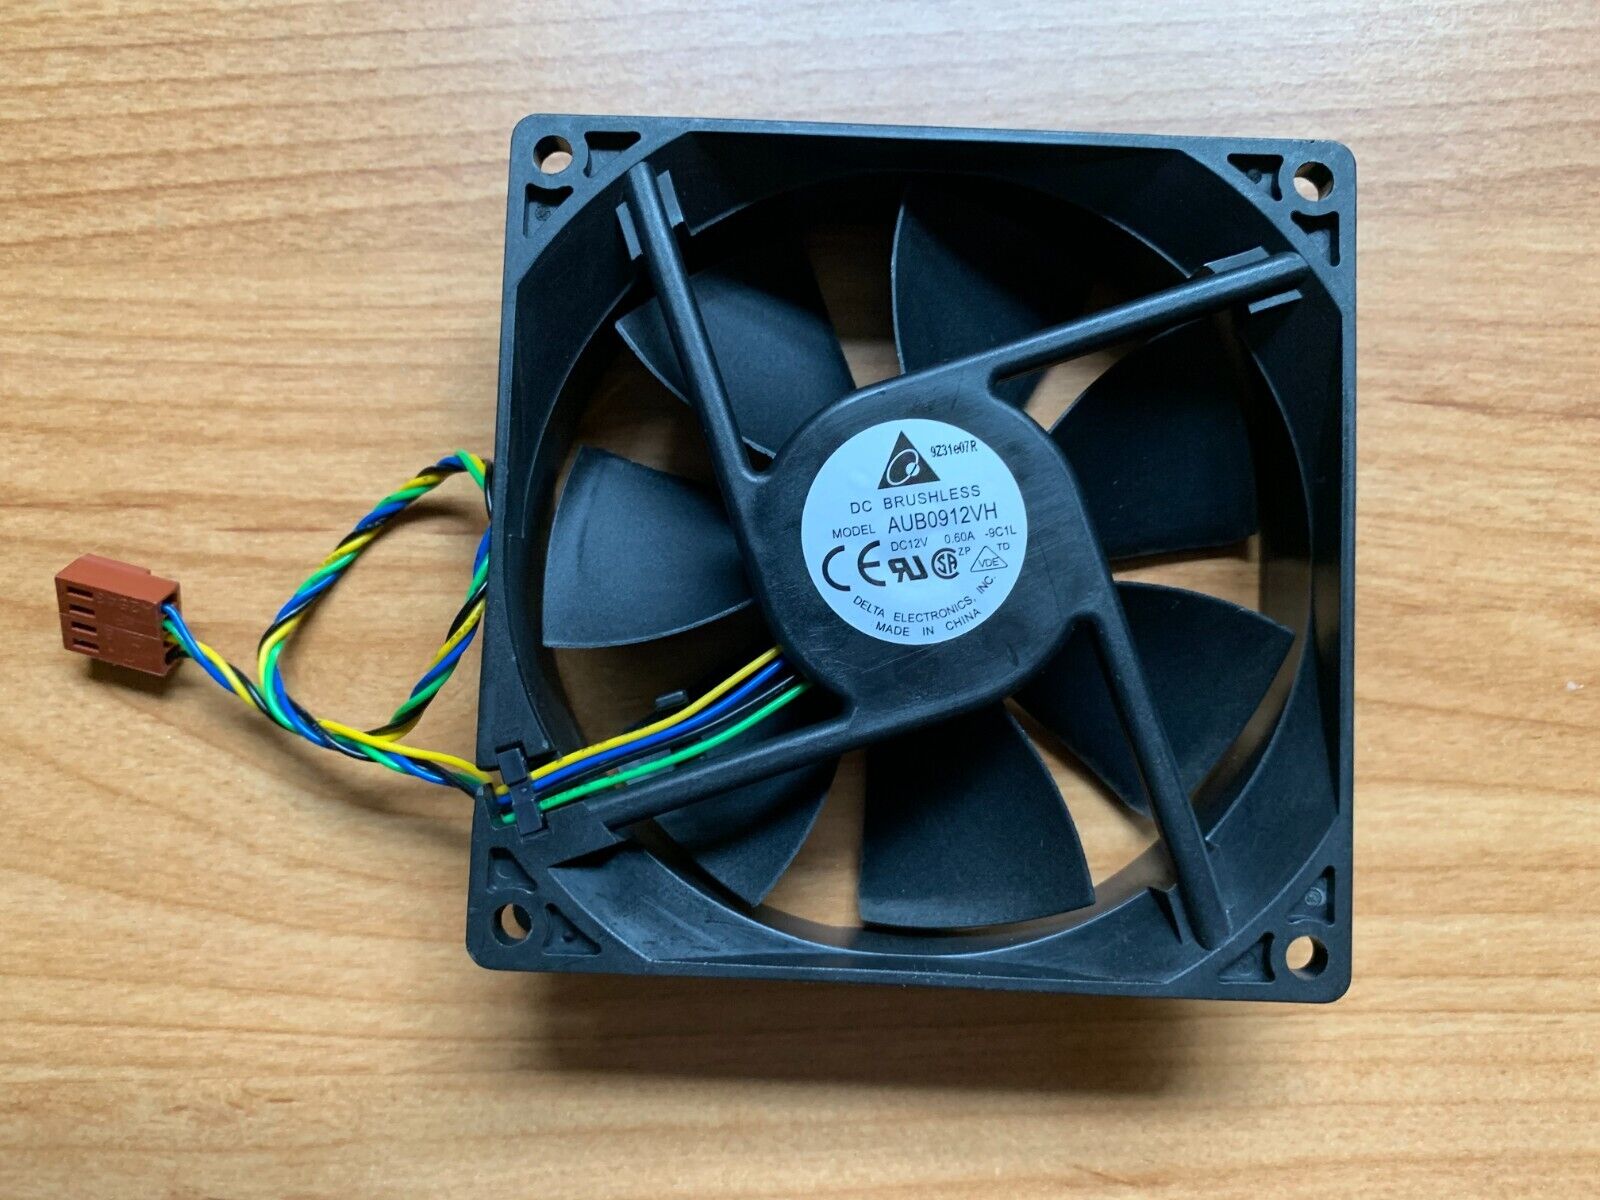 Genuine Delta HP Compaq MicroTower Internal Case Cooling Fan 4-Pin AUB0912VH 12V